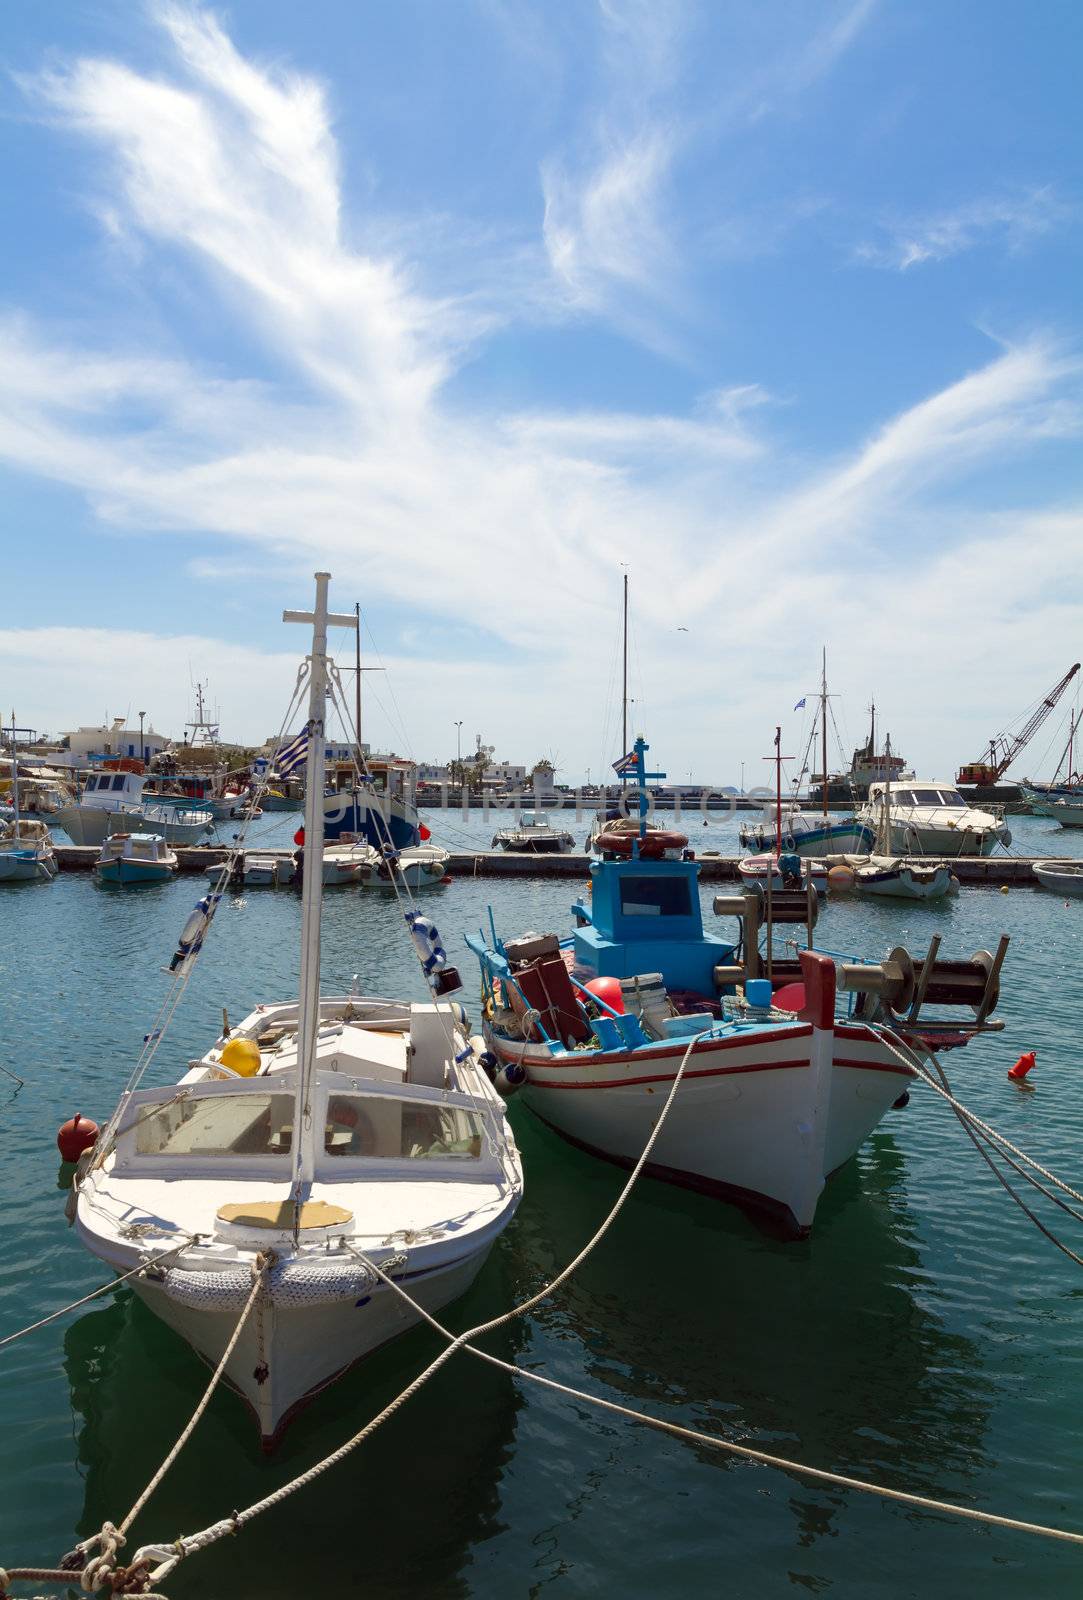 View of the port of Parikia on the island of Paros, Greece